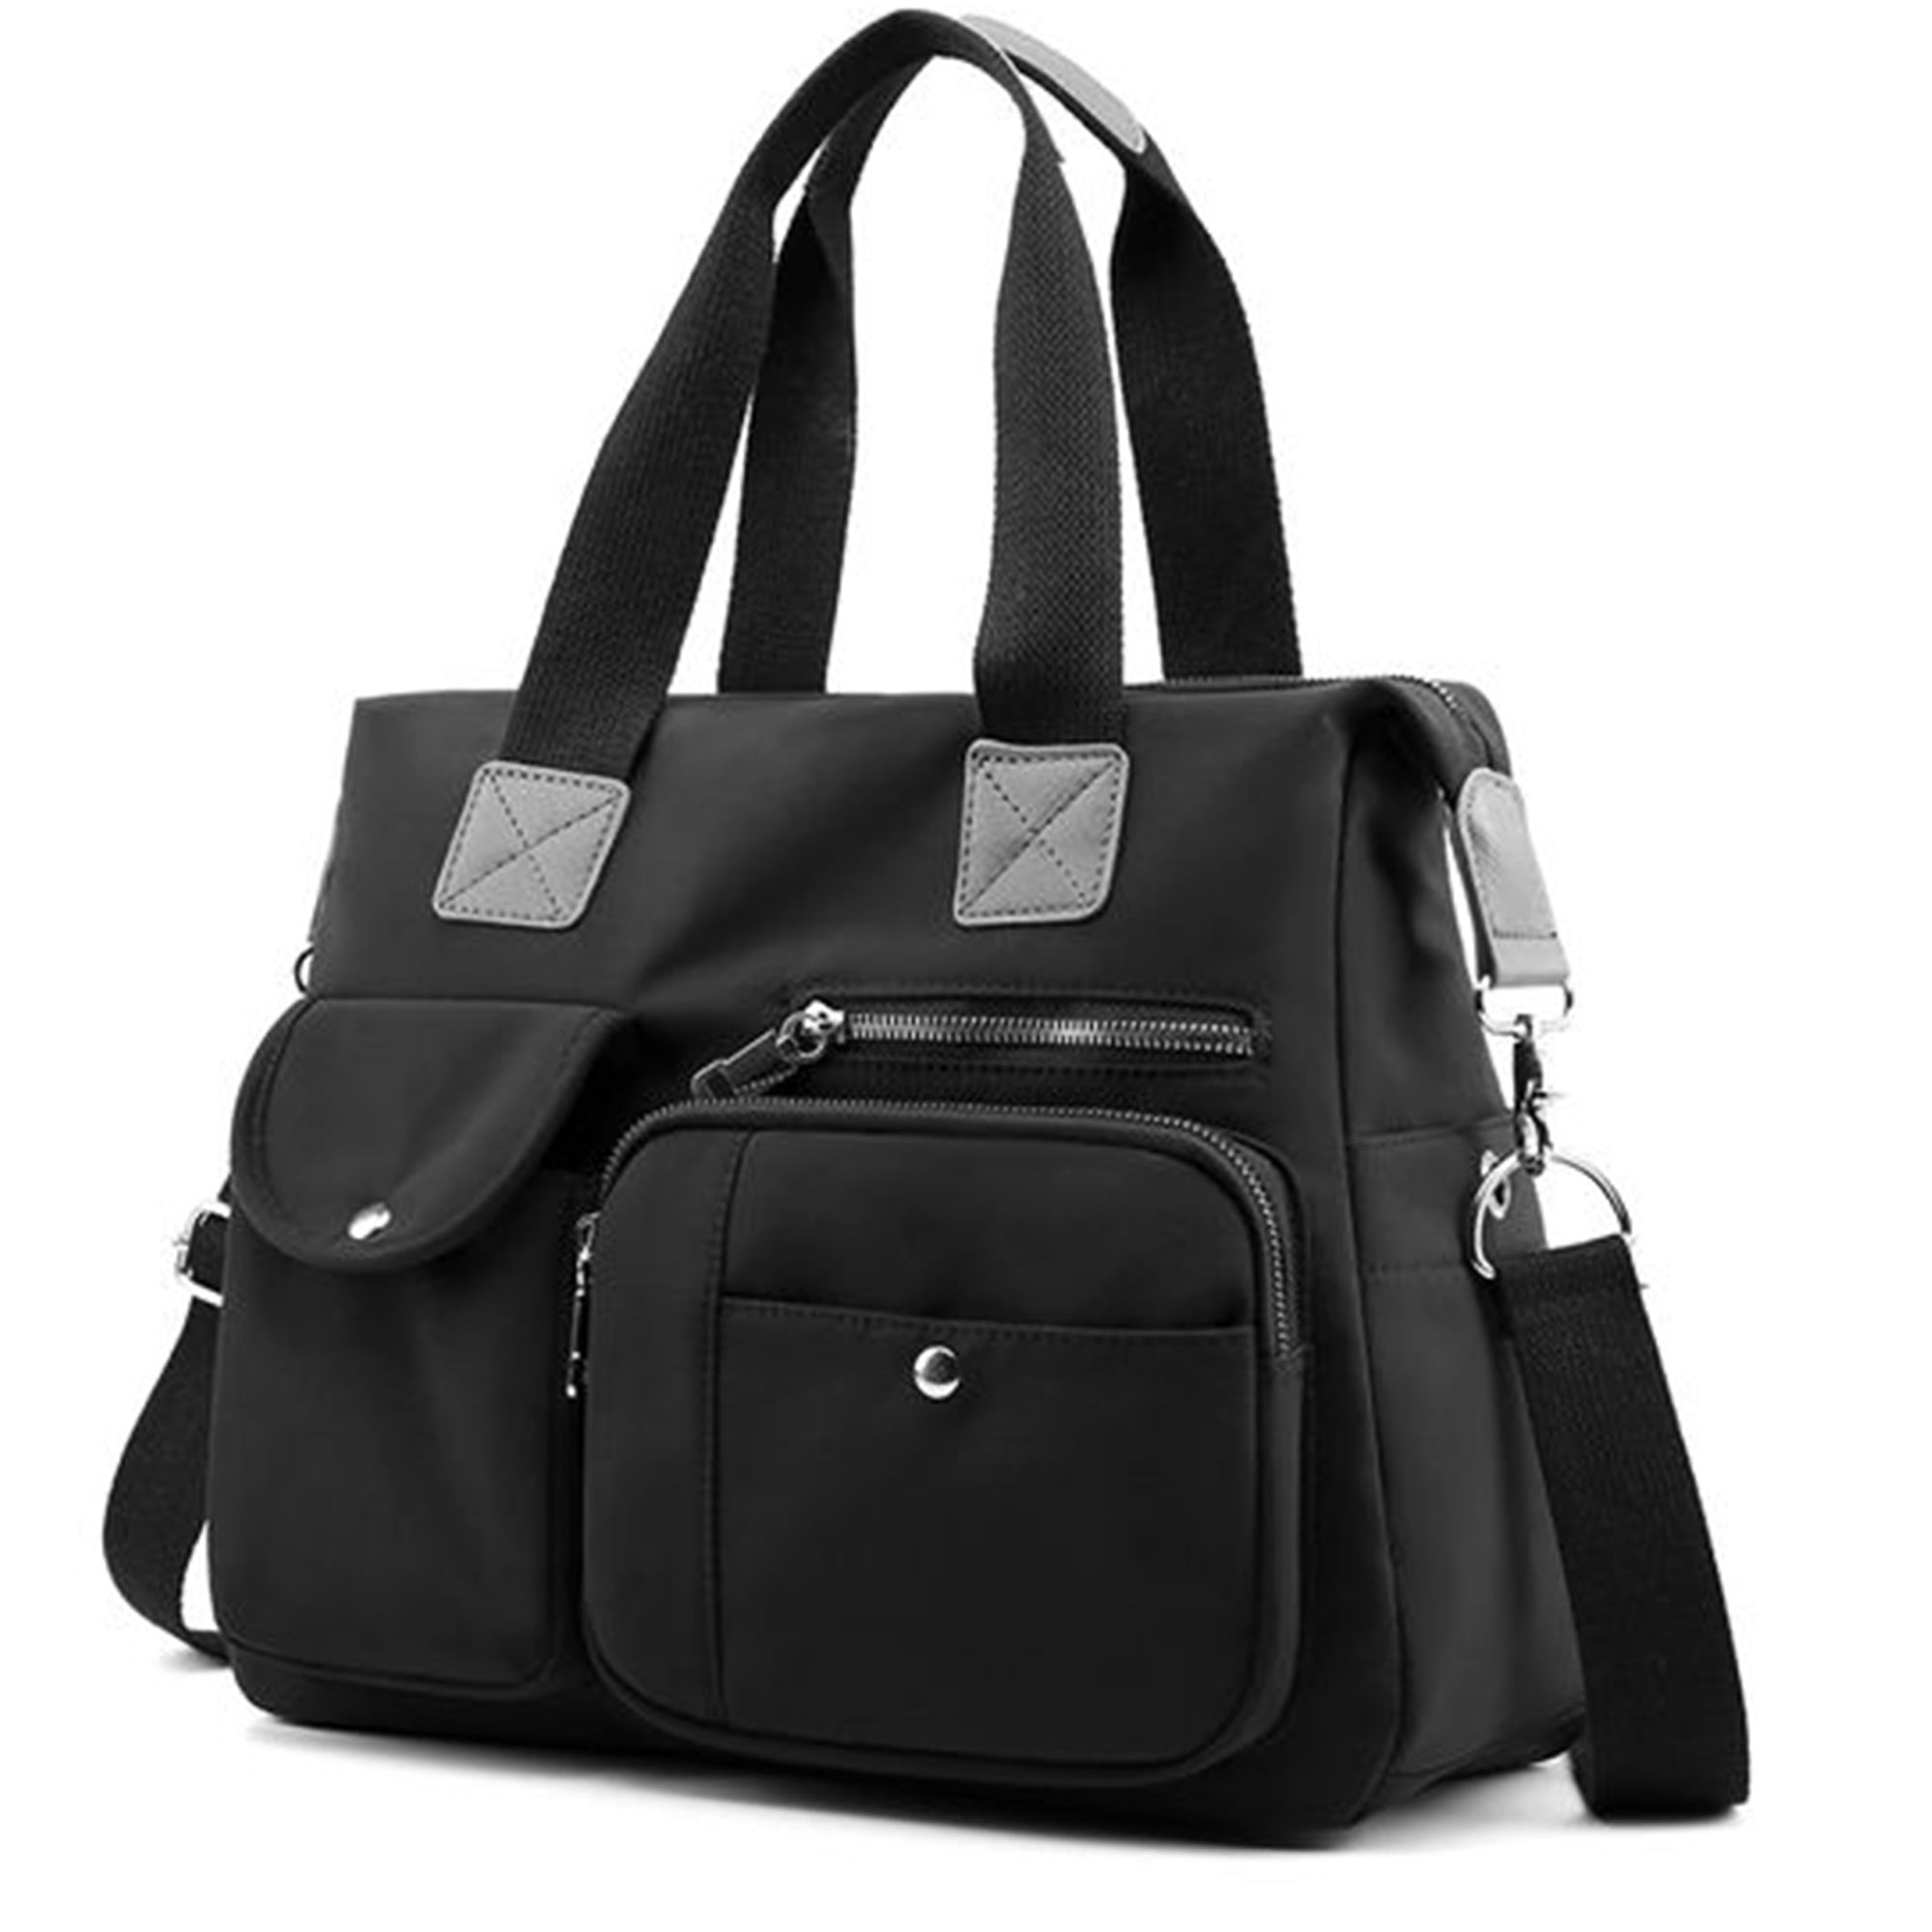 Almusen Handbags Womens Tote Bags Multiple Pockets Lady Shoulder ...